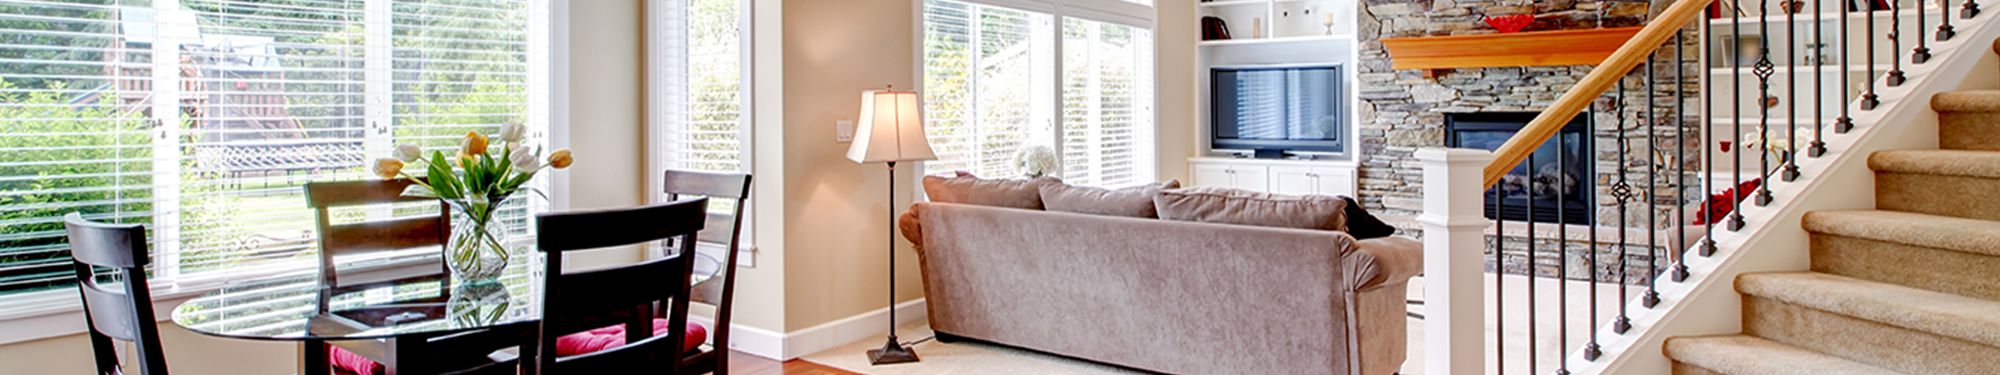 Livingroom with custom window blinds